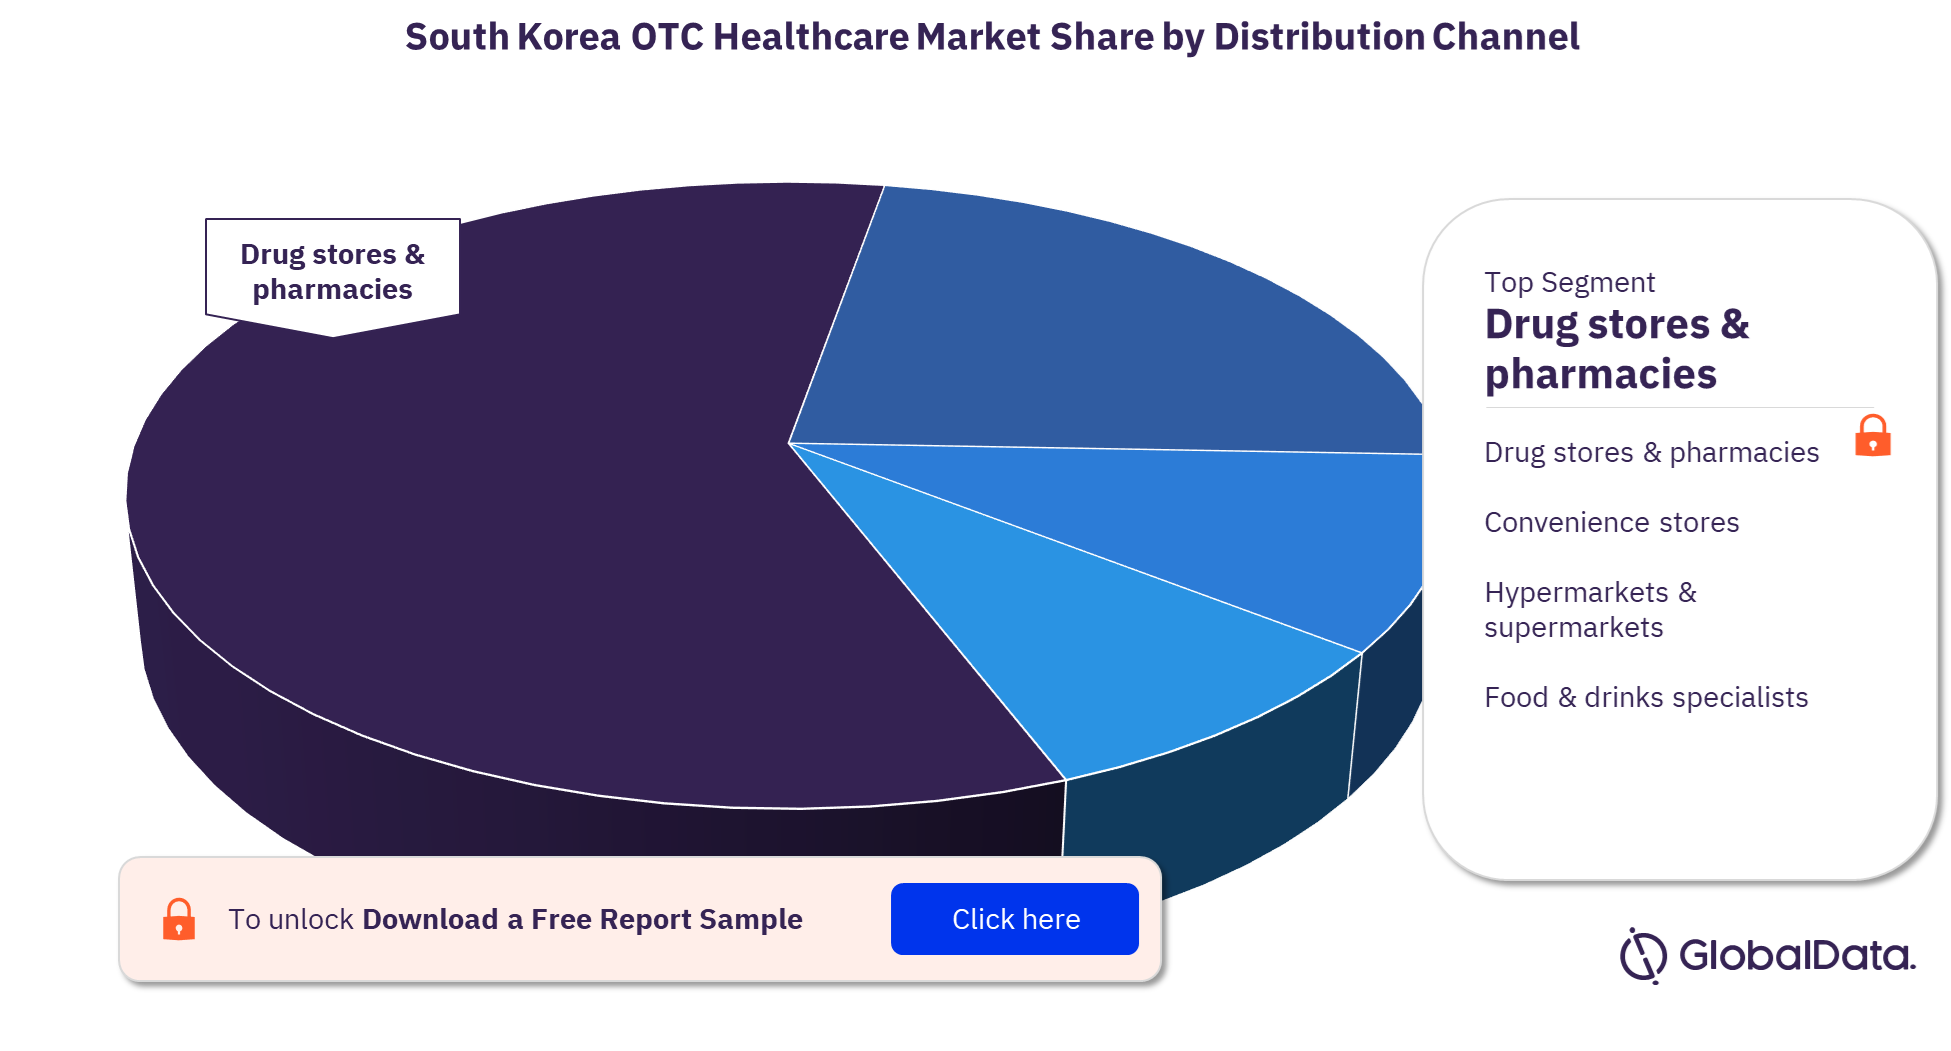 South Korea OTC healthcare market, by key distribution channels